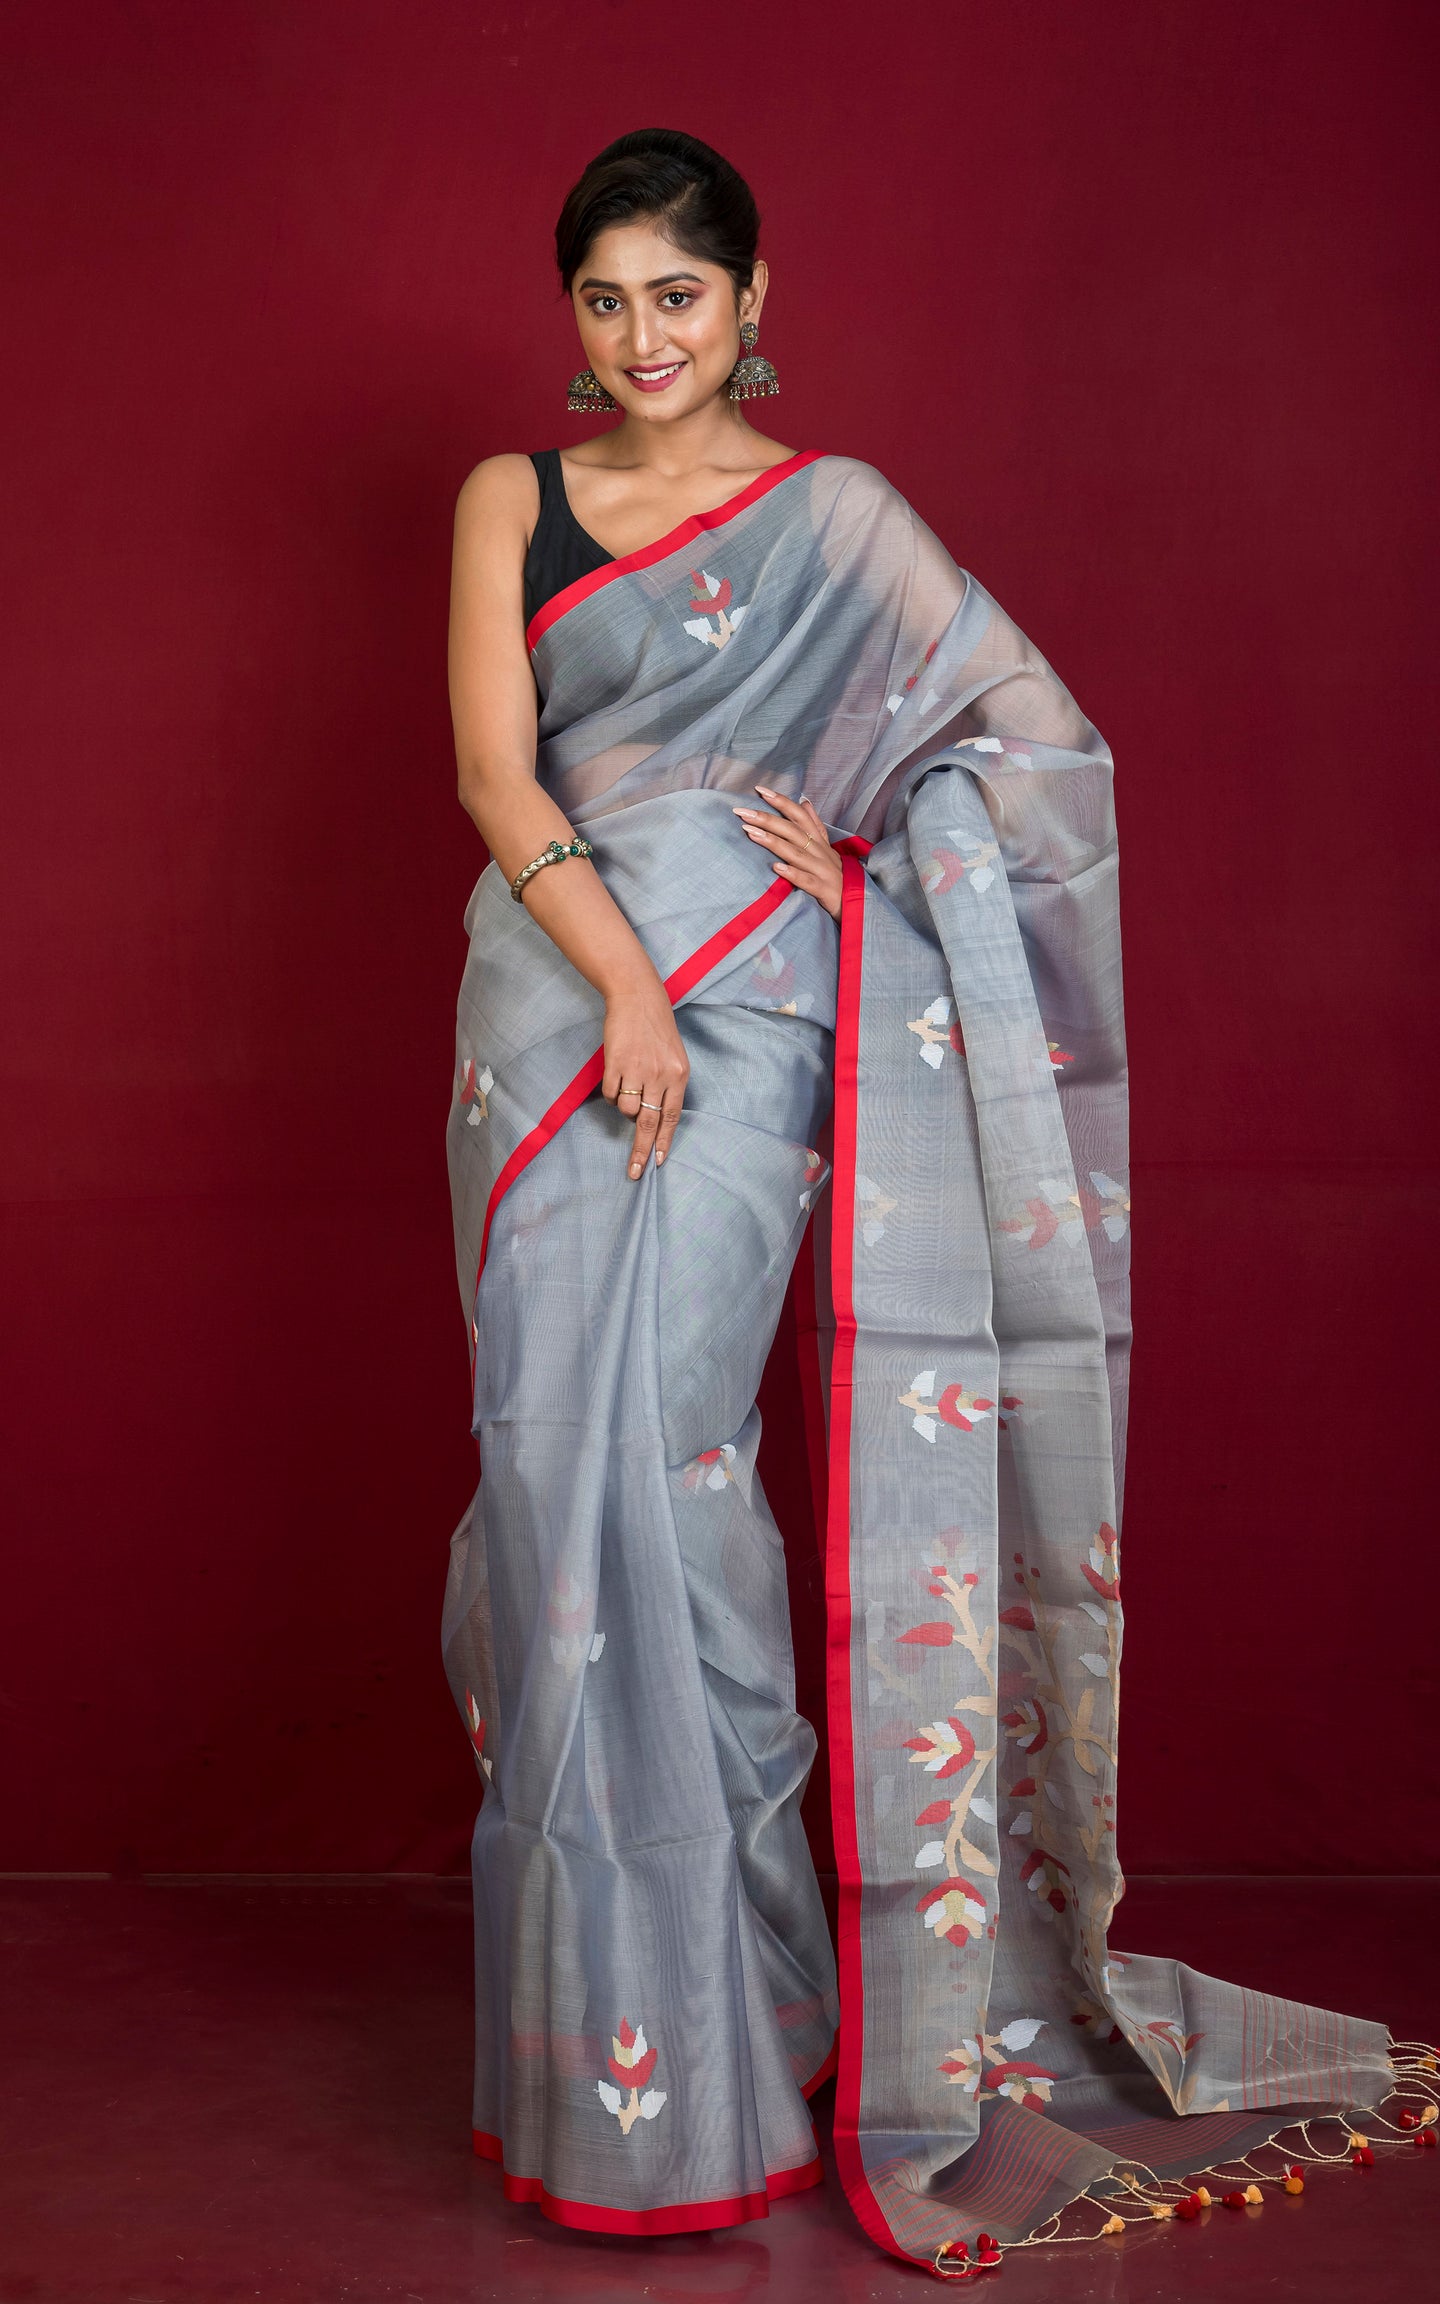 Premium Poth Muslin Silk Jamdani Saree in Steel Grey, Red and Multicolored Thread Work